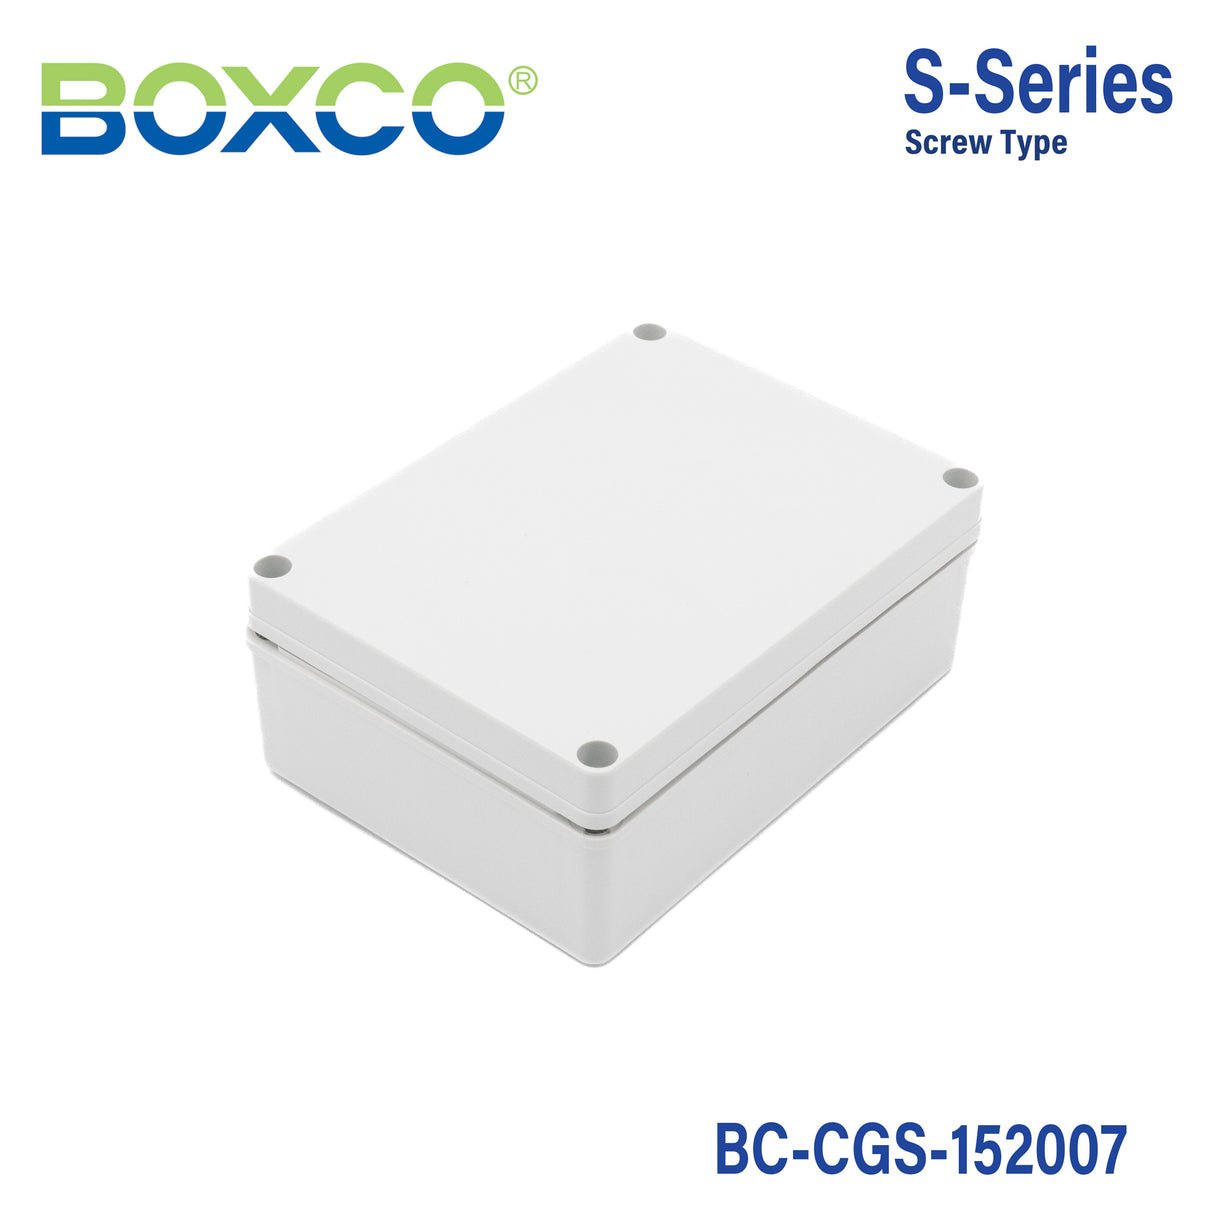 Boxco S-Series 150x200x75mm Plastic Enclosure, IP67, IK08, PC, Grey Cover, Screw Type